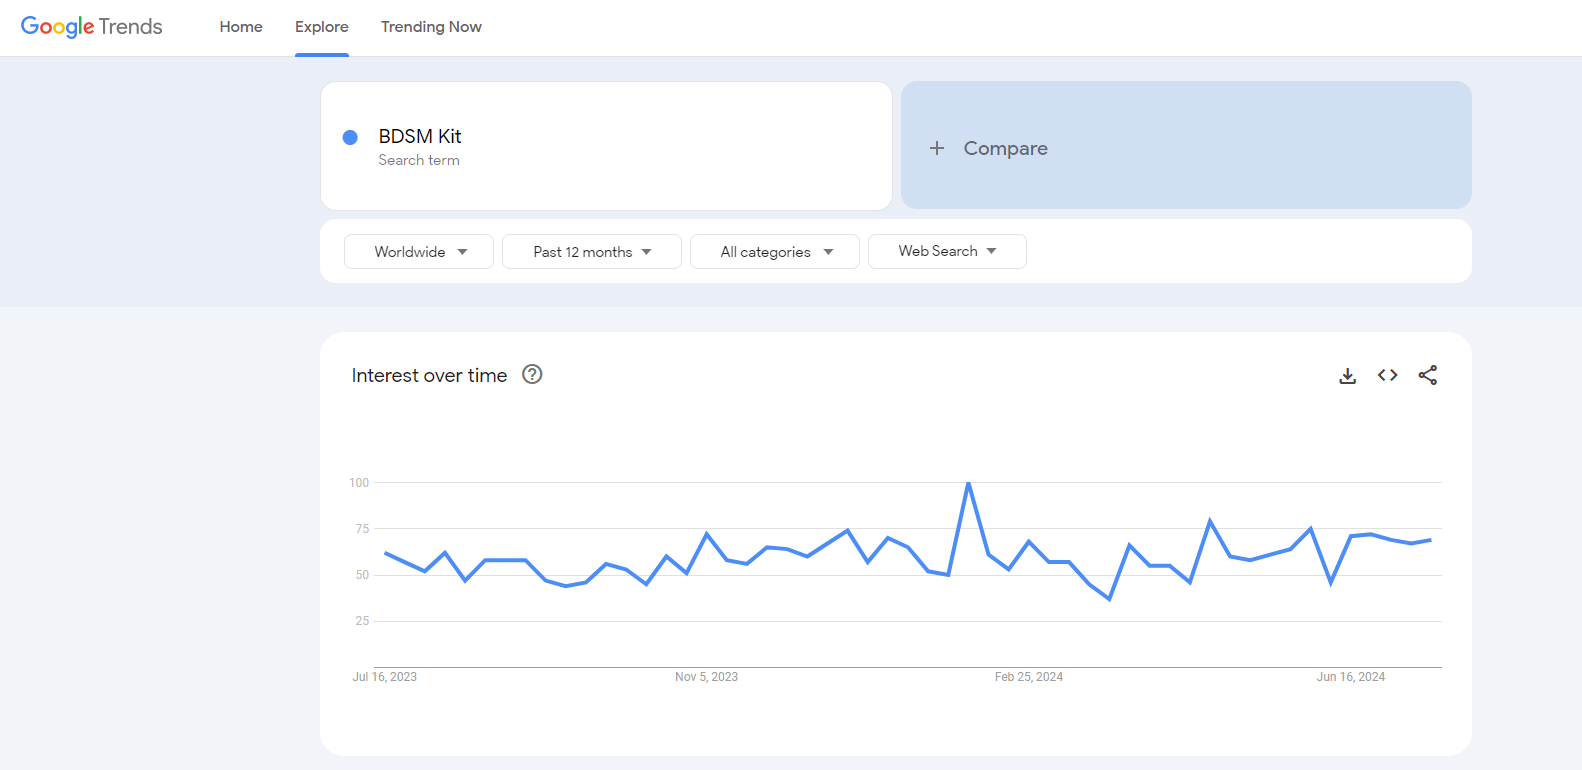 bdms kits google trends results